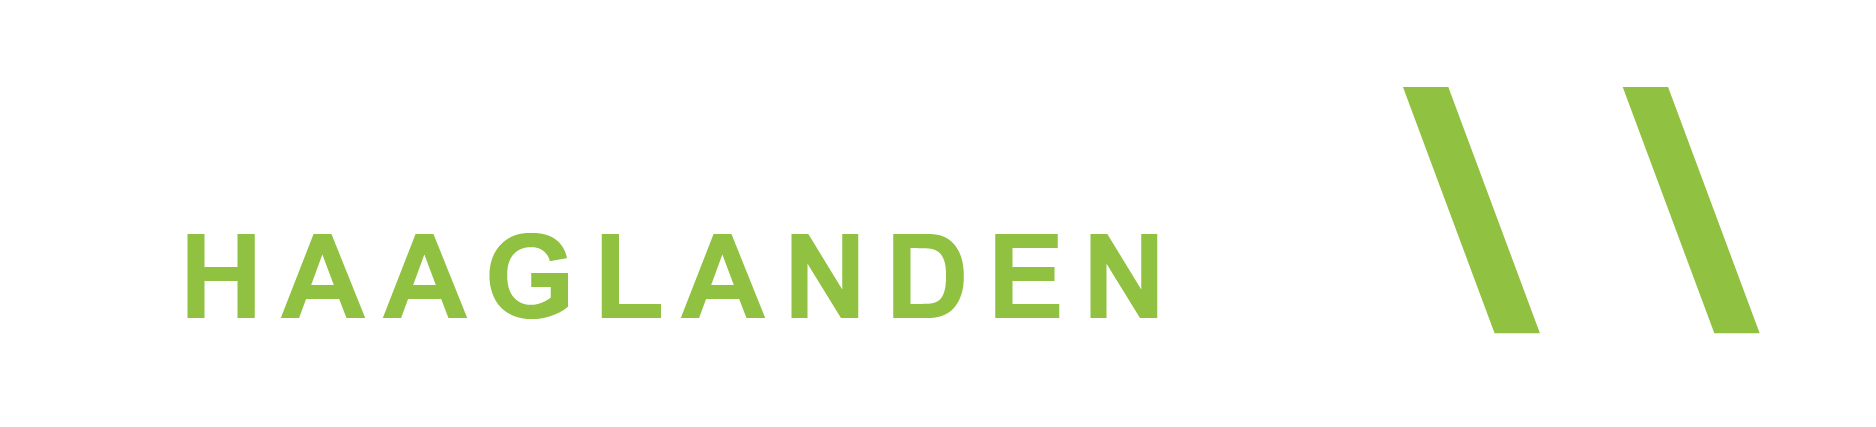 Partytentverhuur Haaglanden ov Haaglanden Verhuur BV Logo